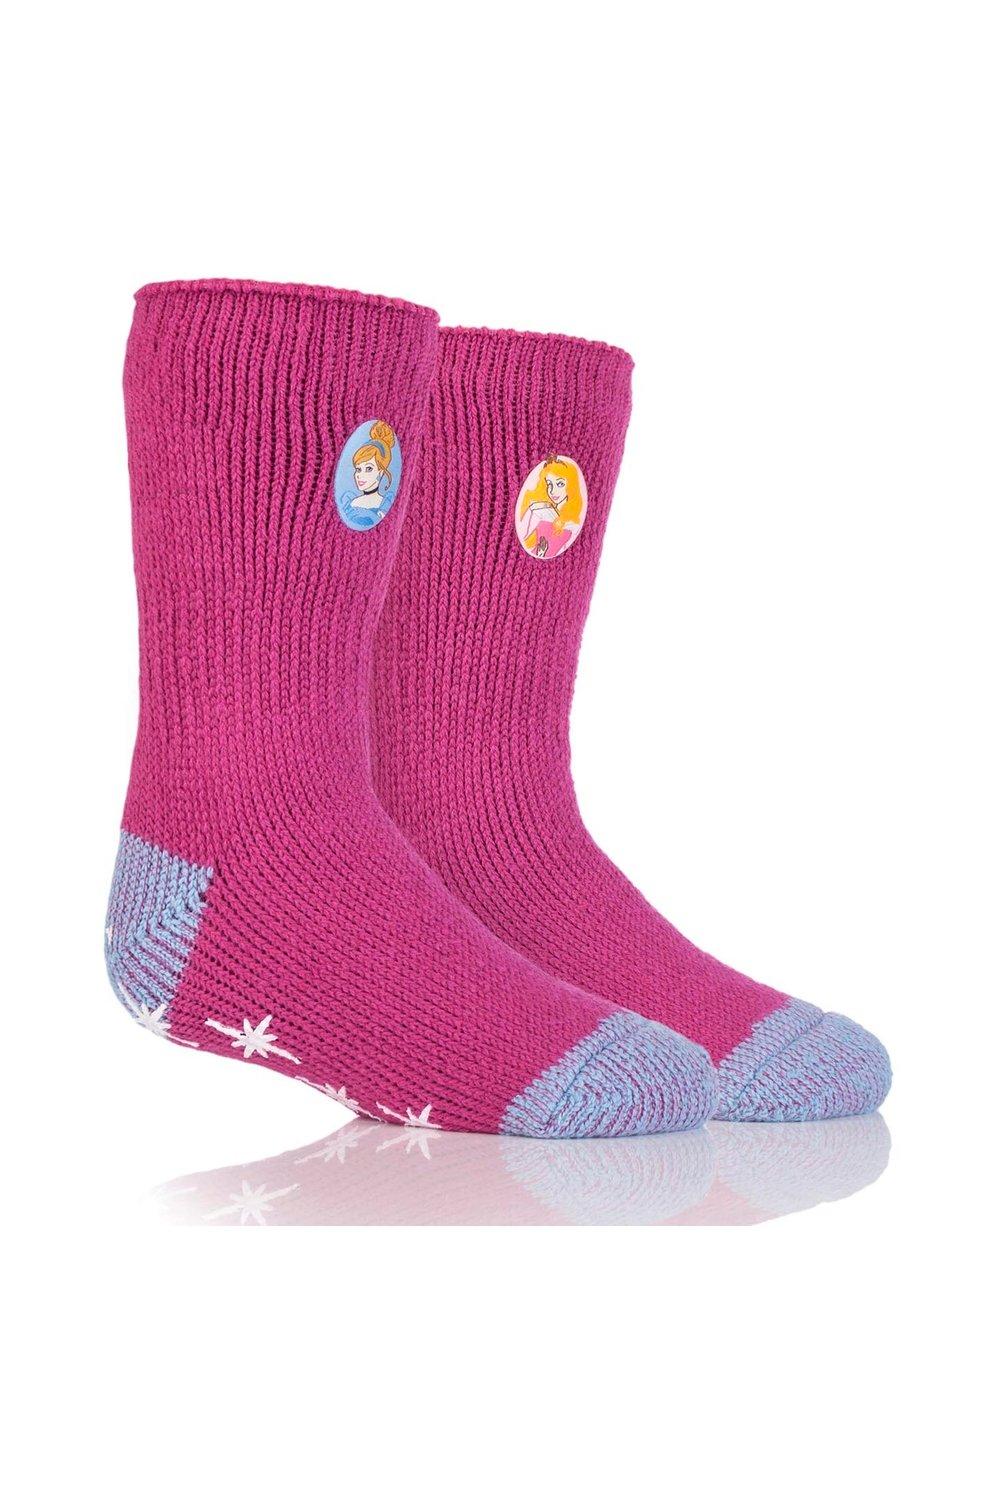 1 pair disney princess slipper socks with grip